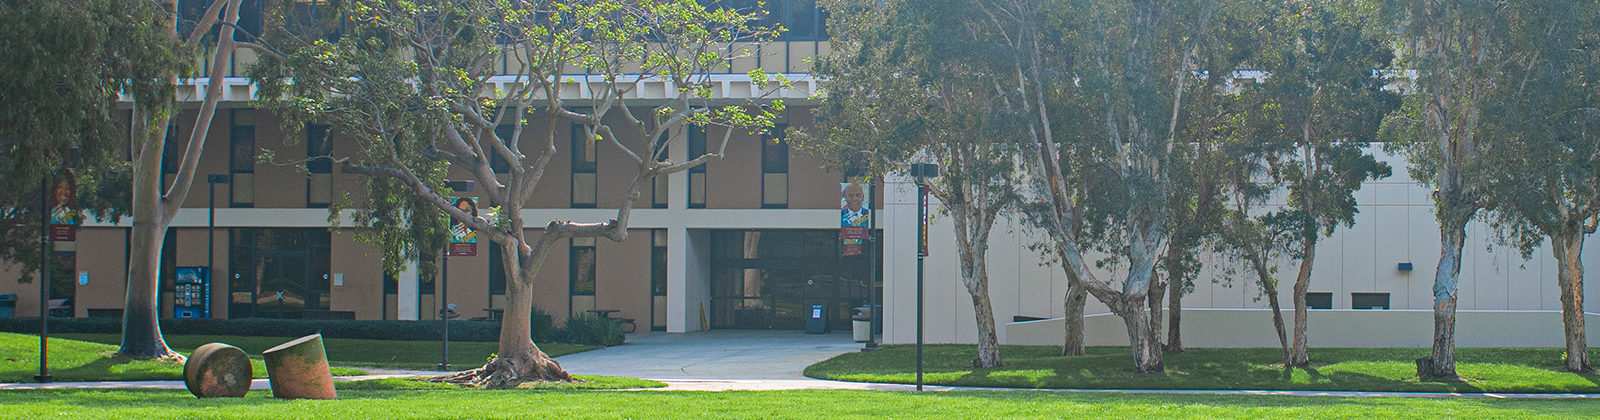 Photo of LaCorte Hall on CSUDH campus